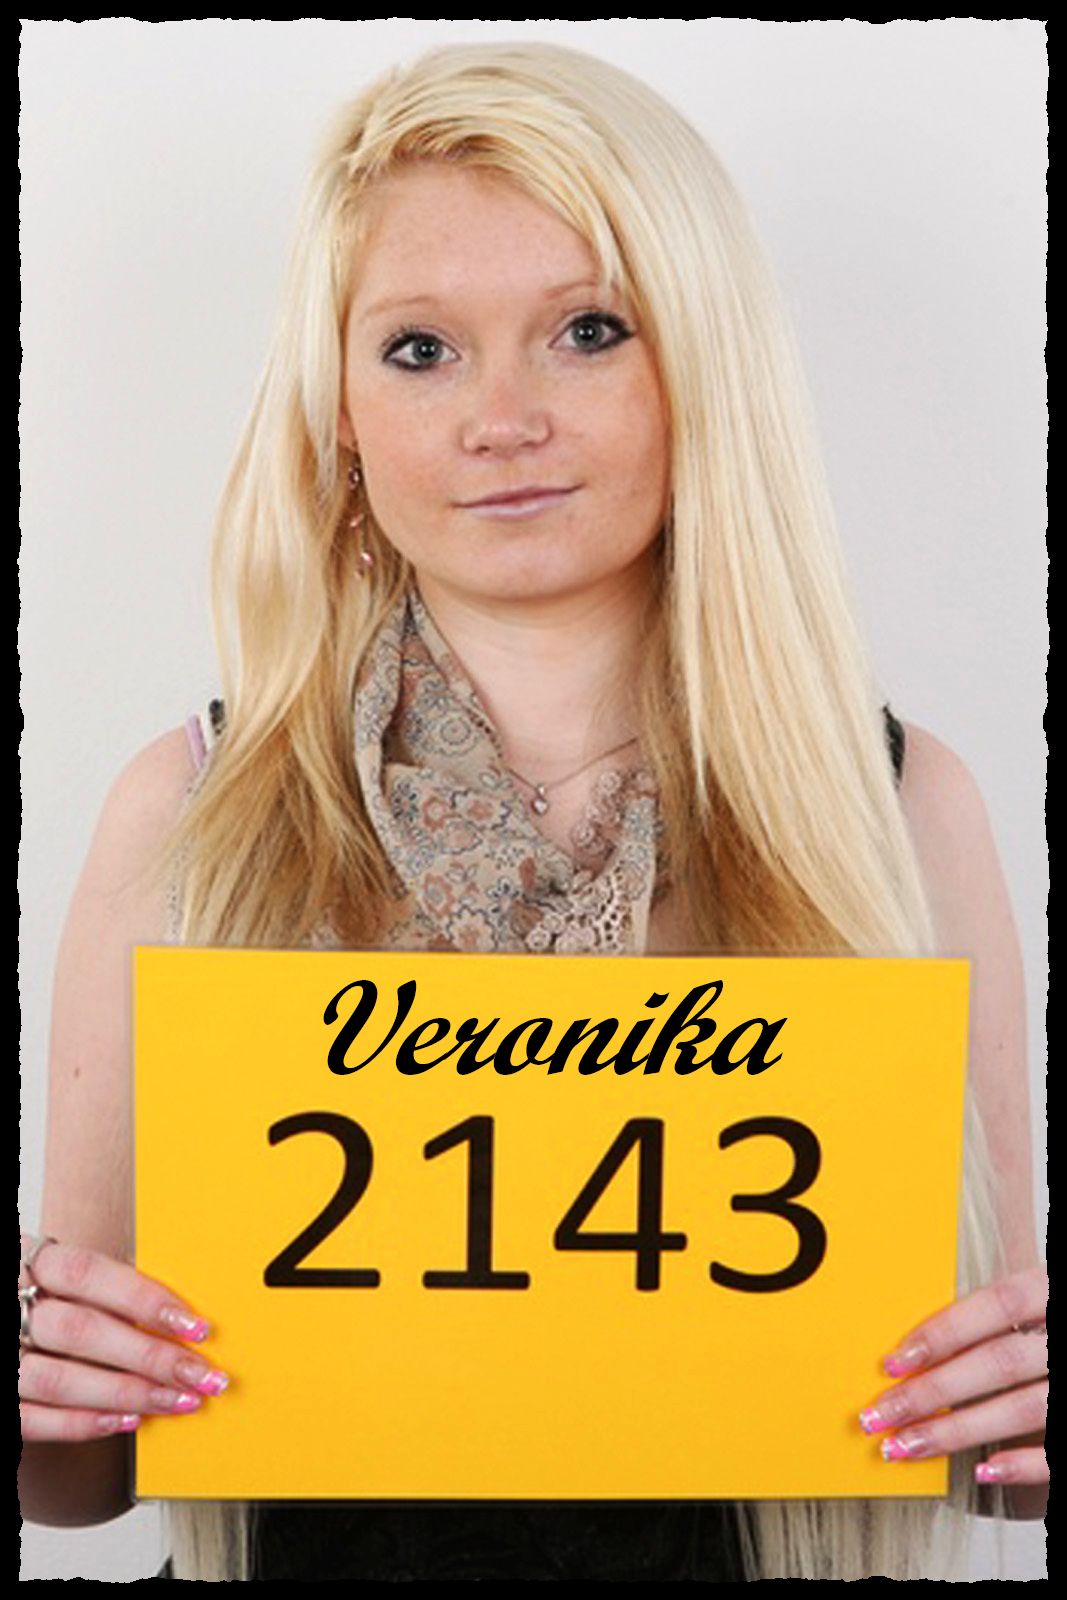 Czech Casting 02 2143 Veronika 1 Porn Pic Eporner